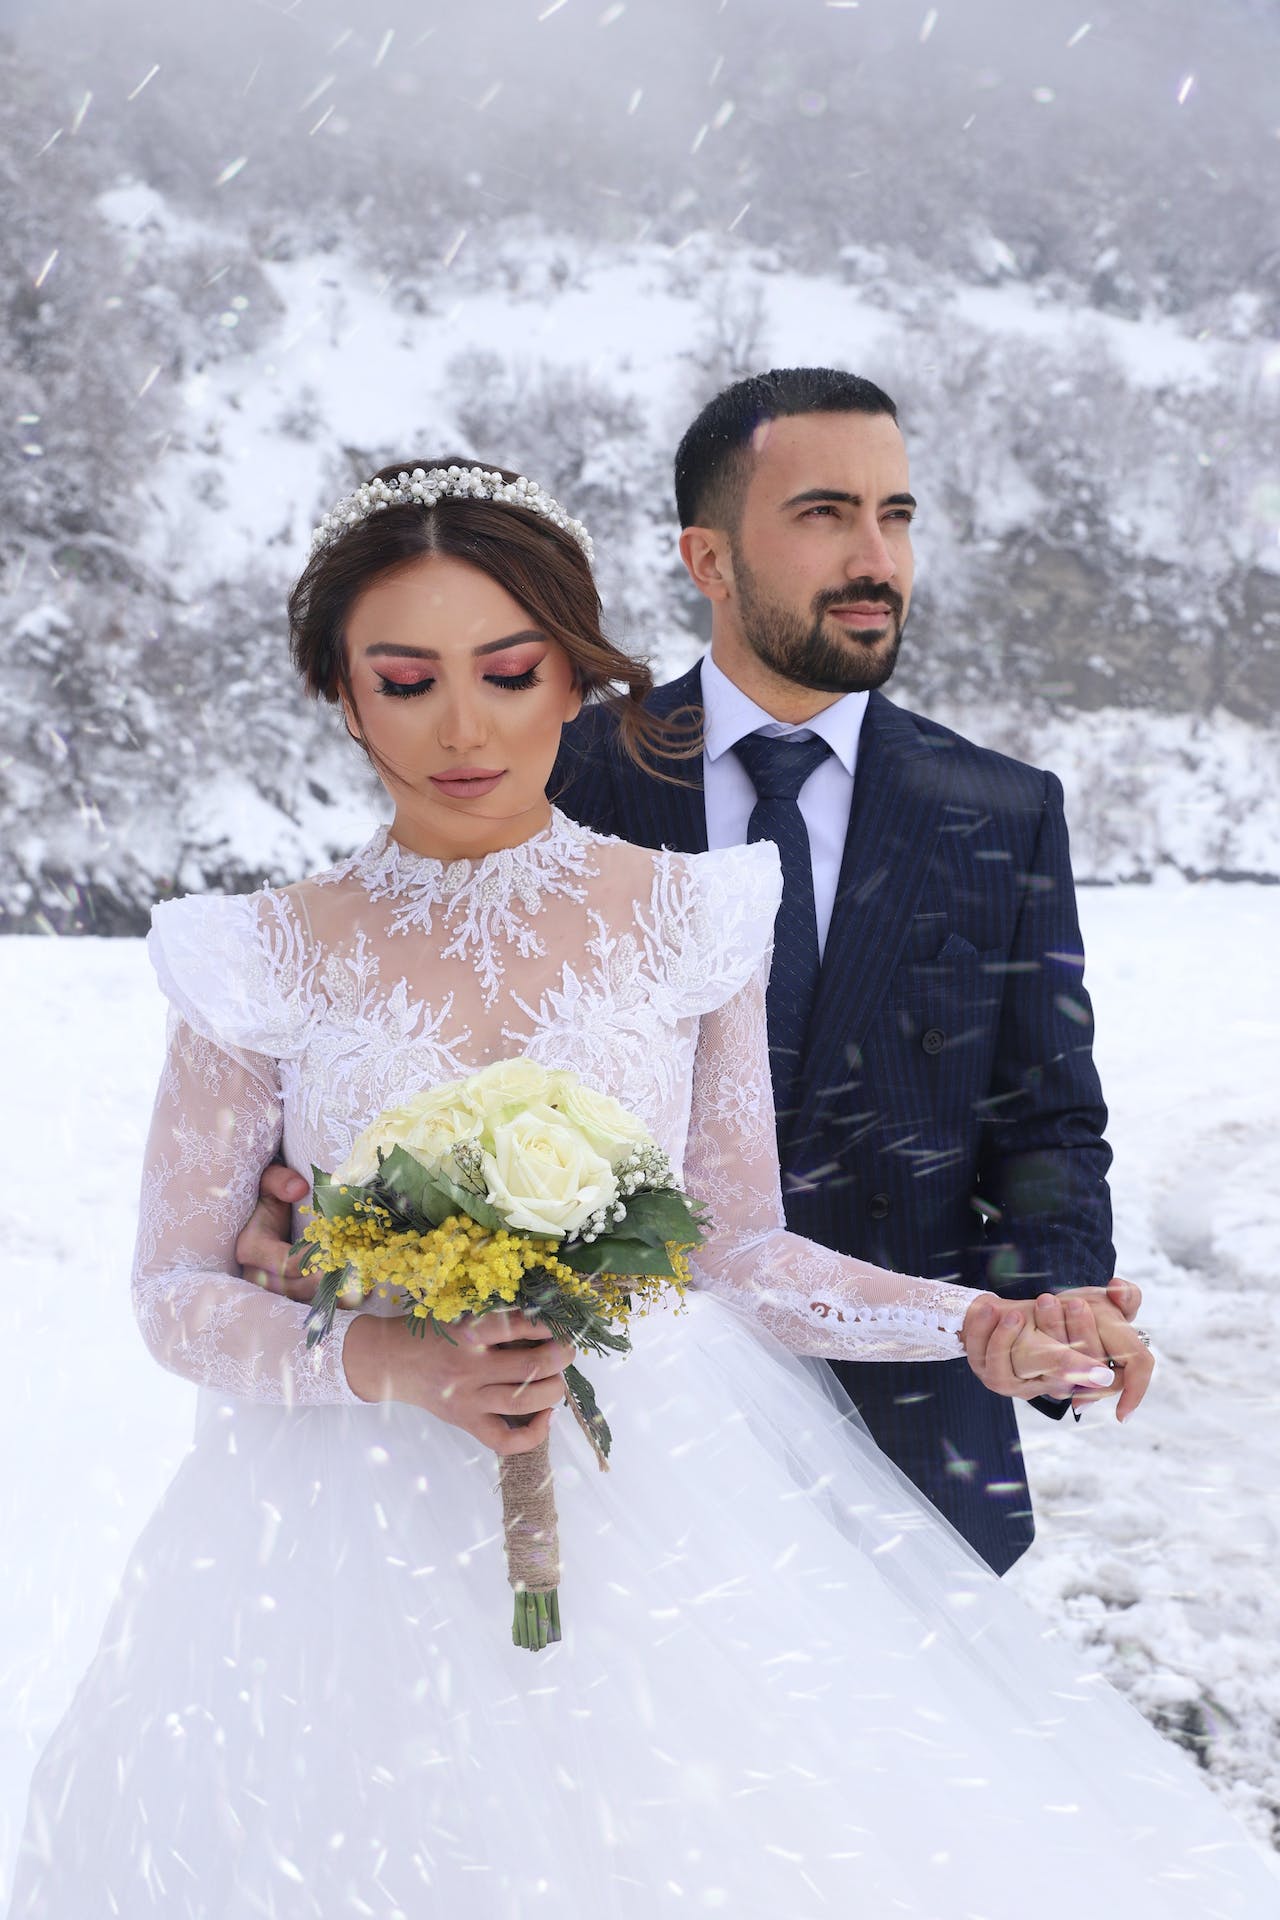 Winter Wonderland Weddings: Creating a Sparkling Fairytale